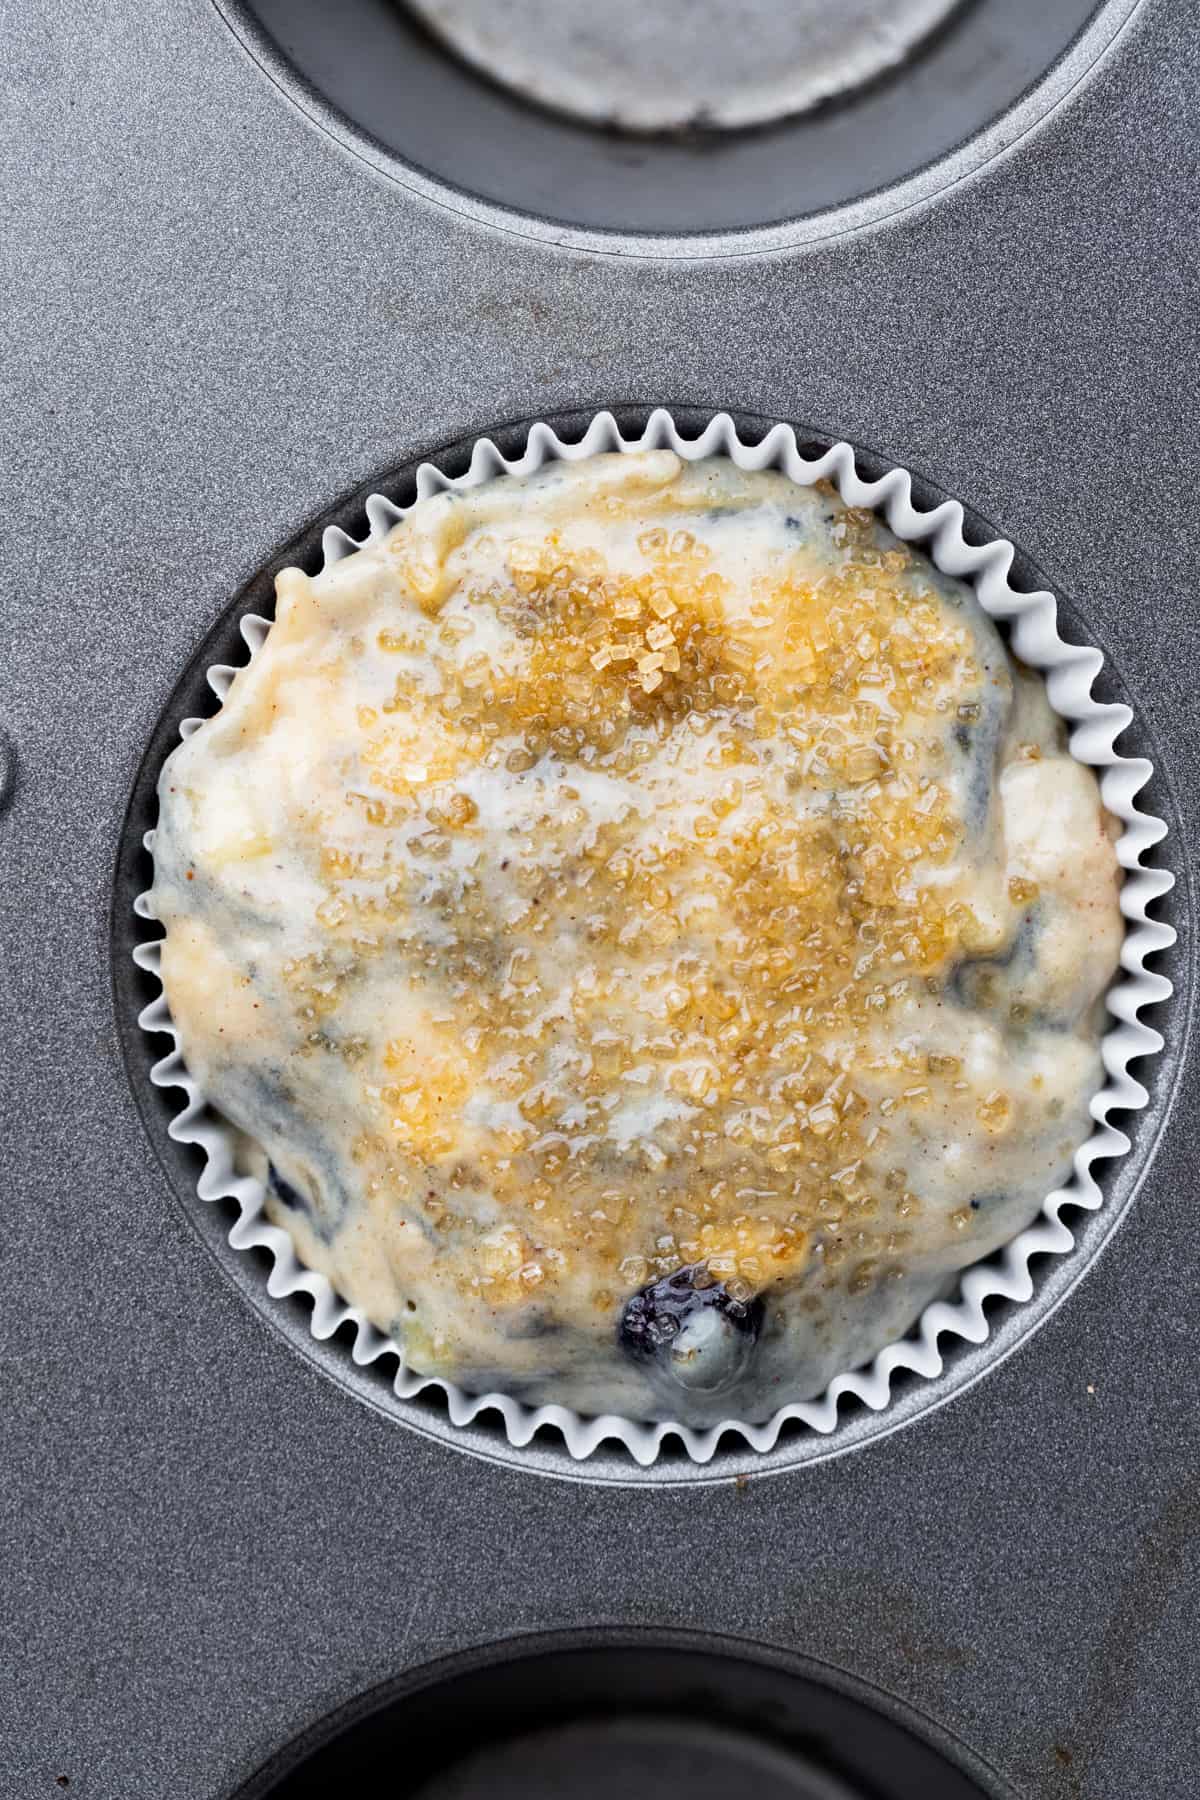 Muffin batter in a muffin pan.